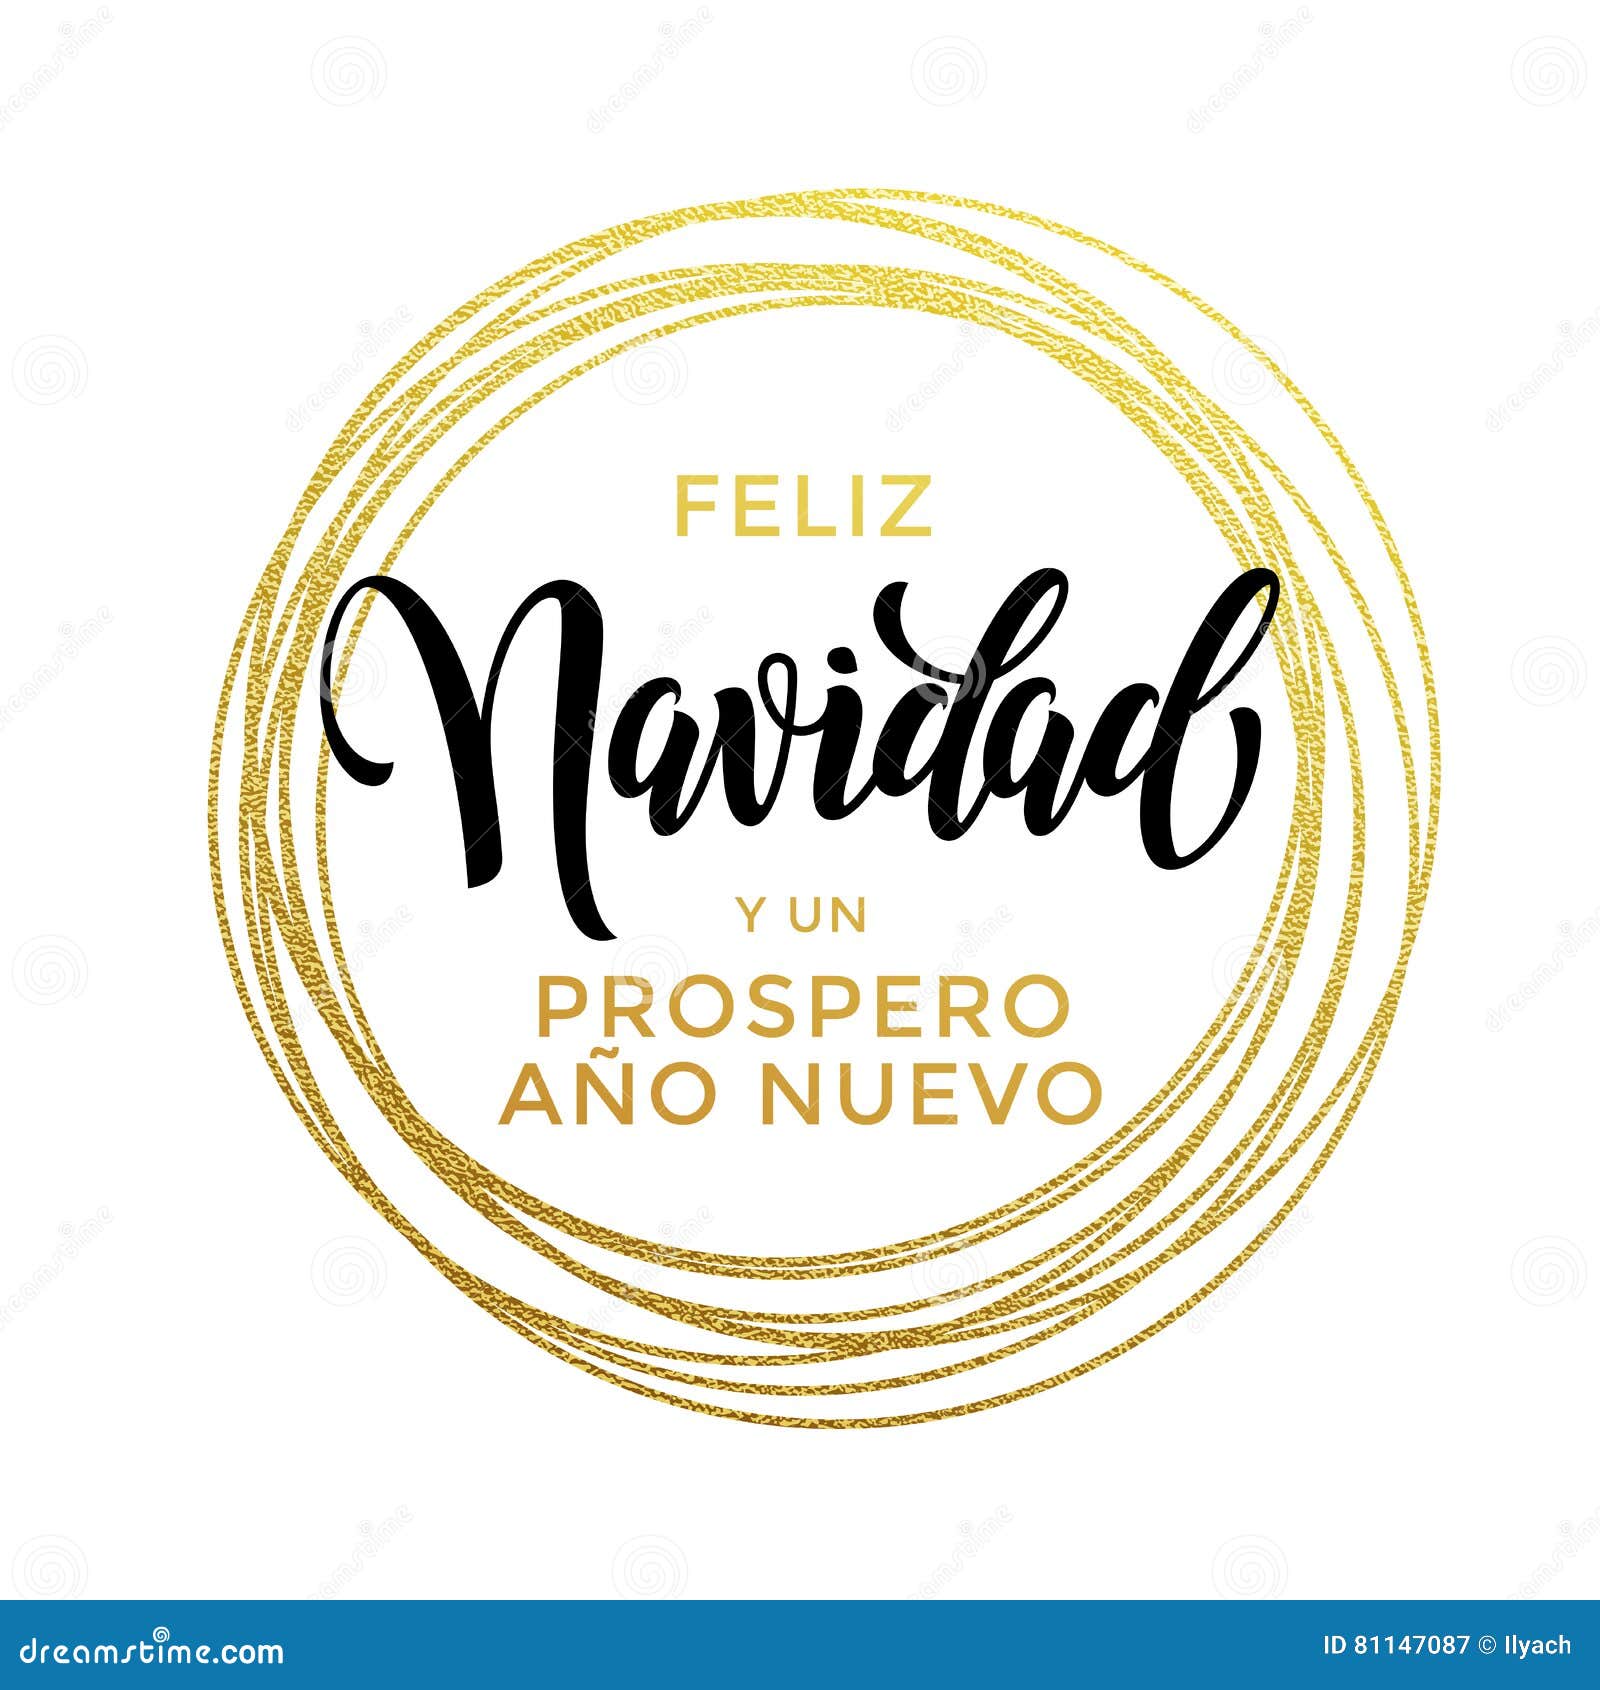 feliz navidad, prospero ano nuevo spanish new year christmas text